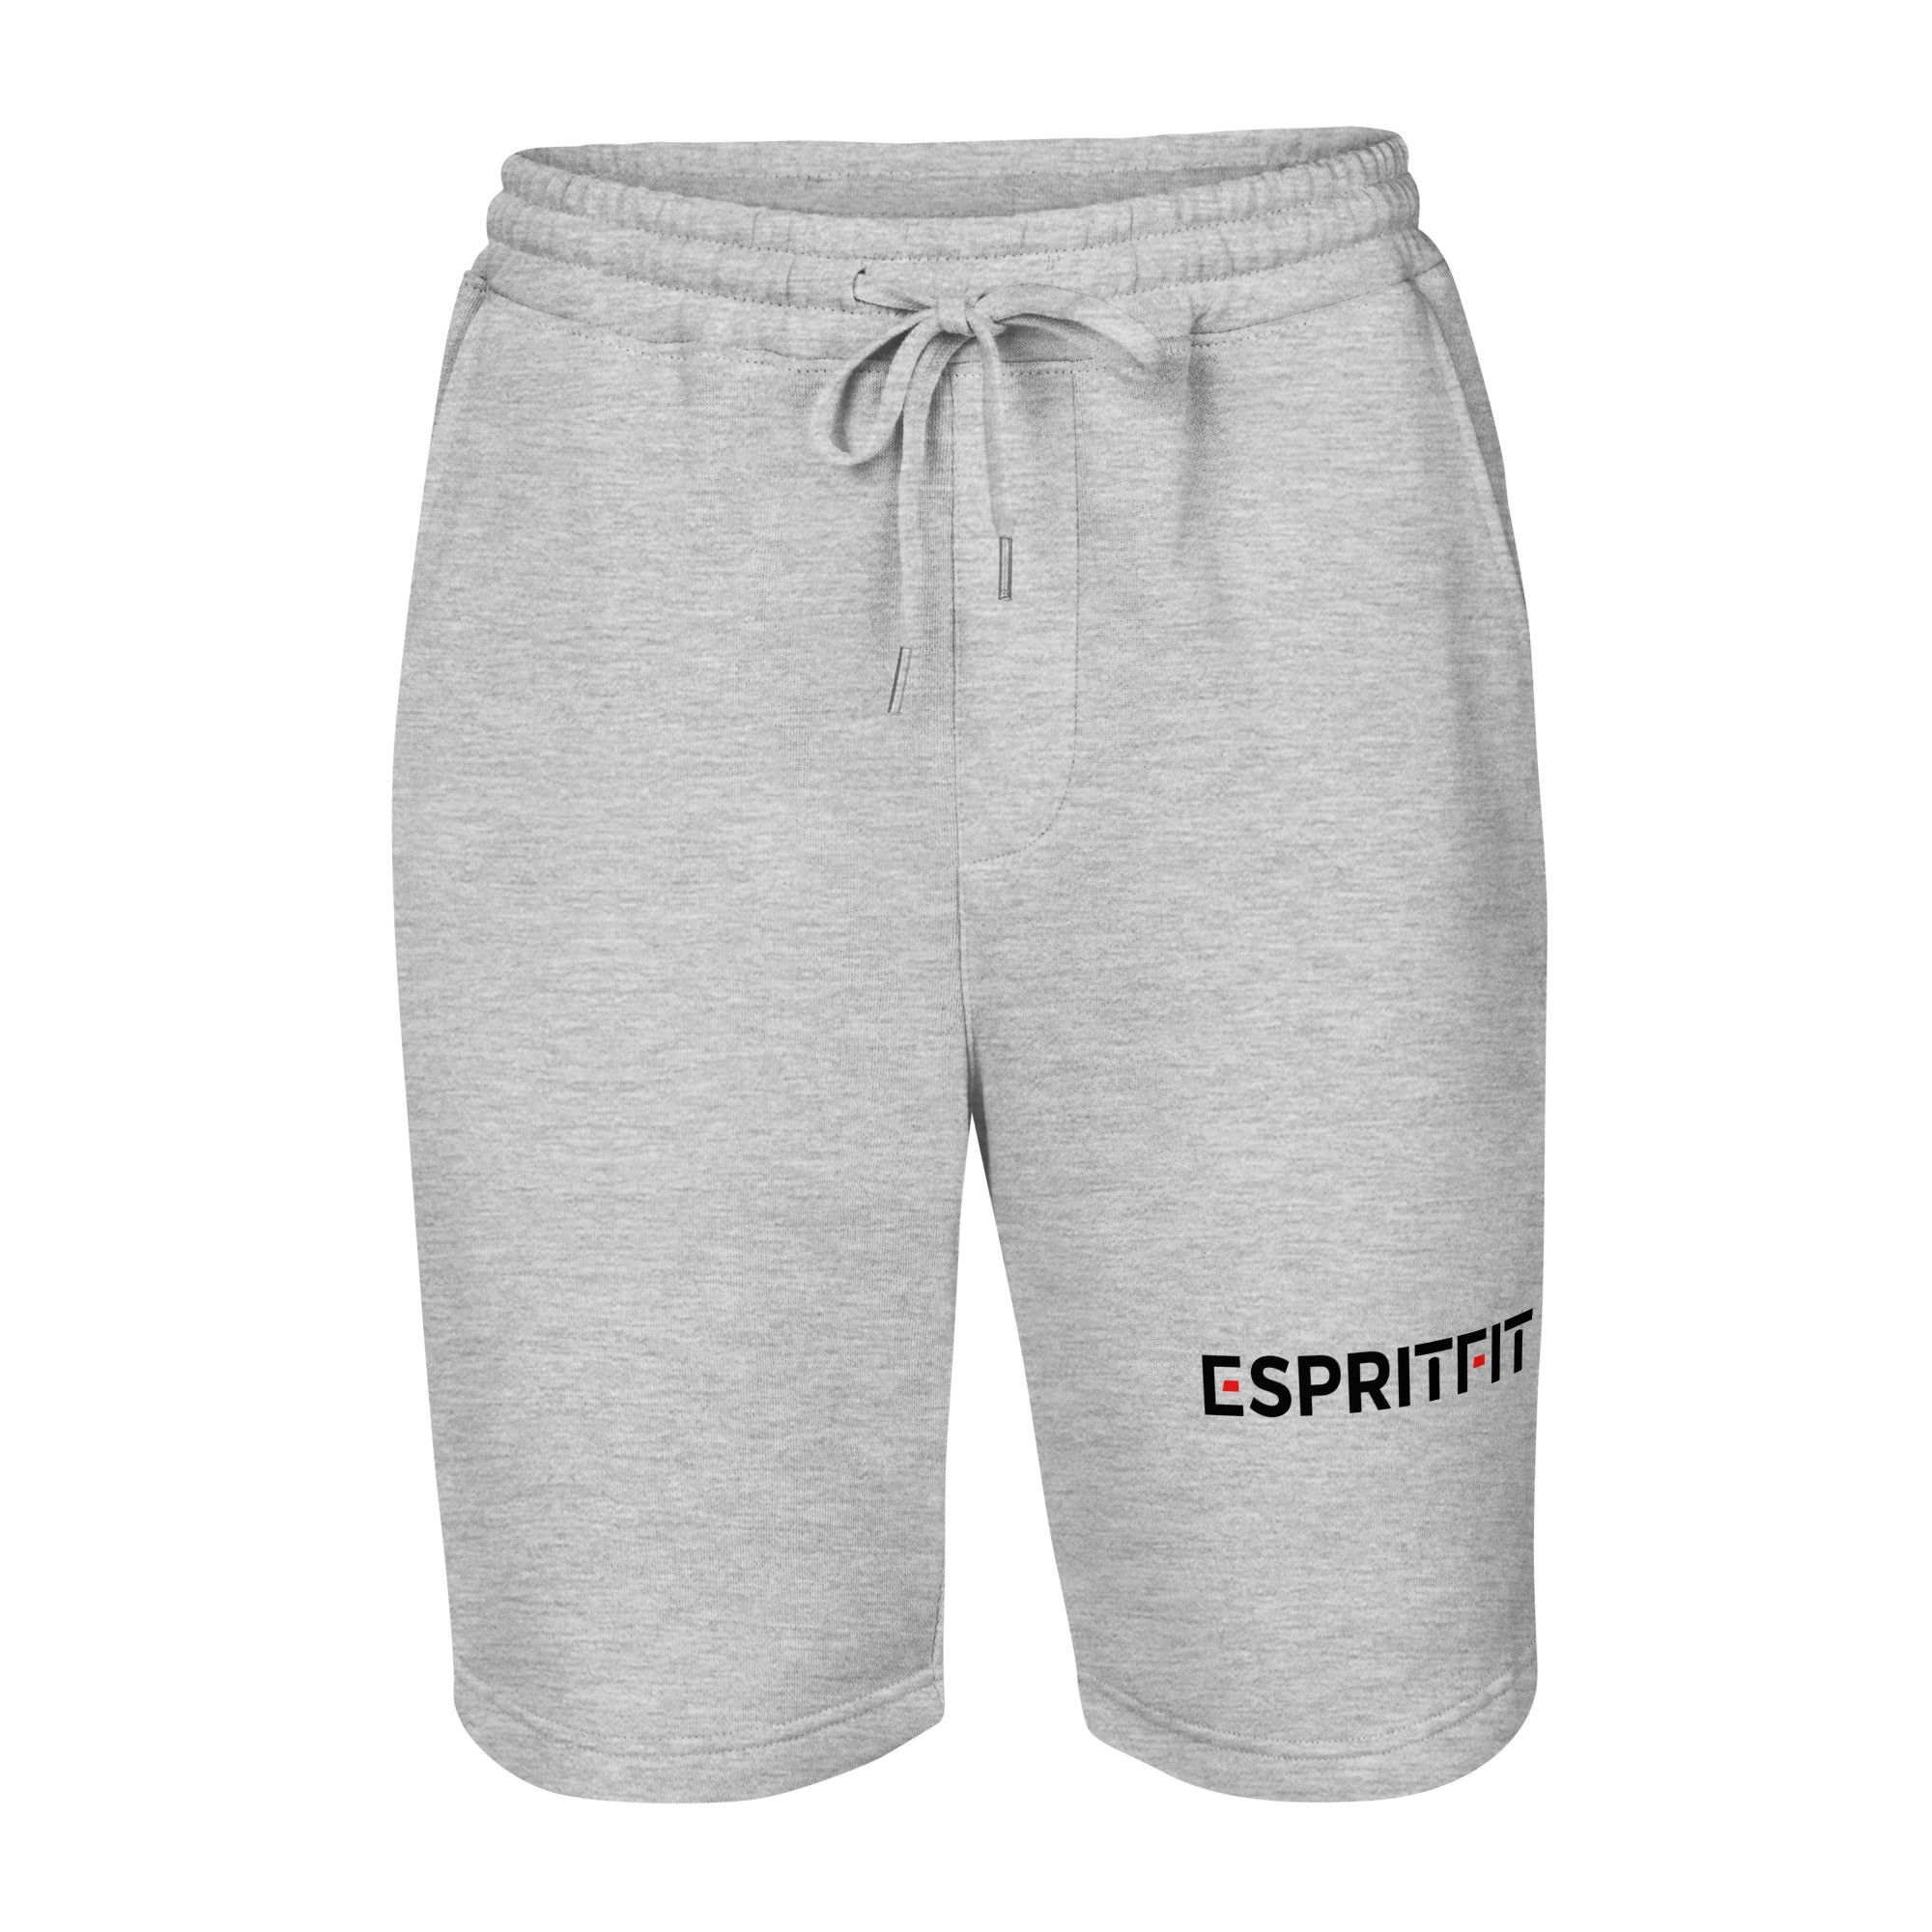 Espritfit SportLuxe Fleece Shorts - Espritfit